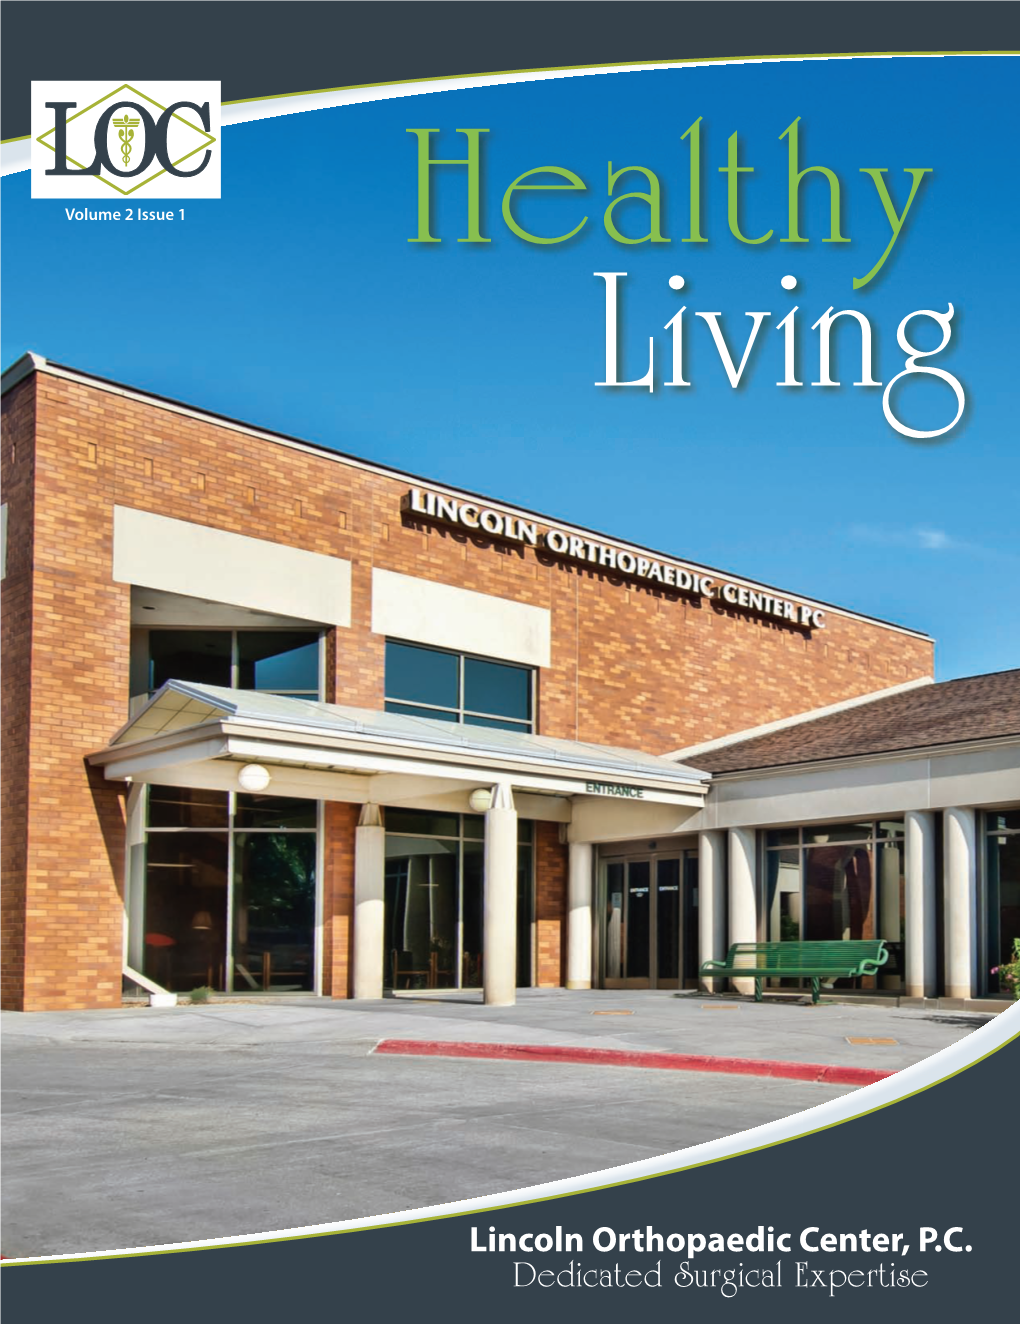 LOC Healthy Living Magazine